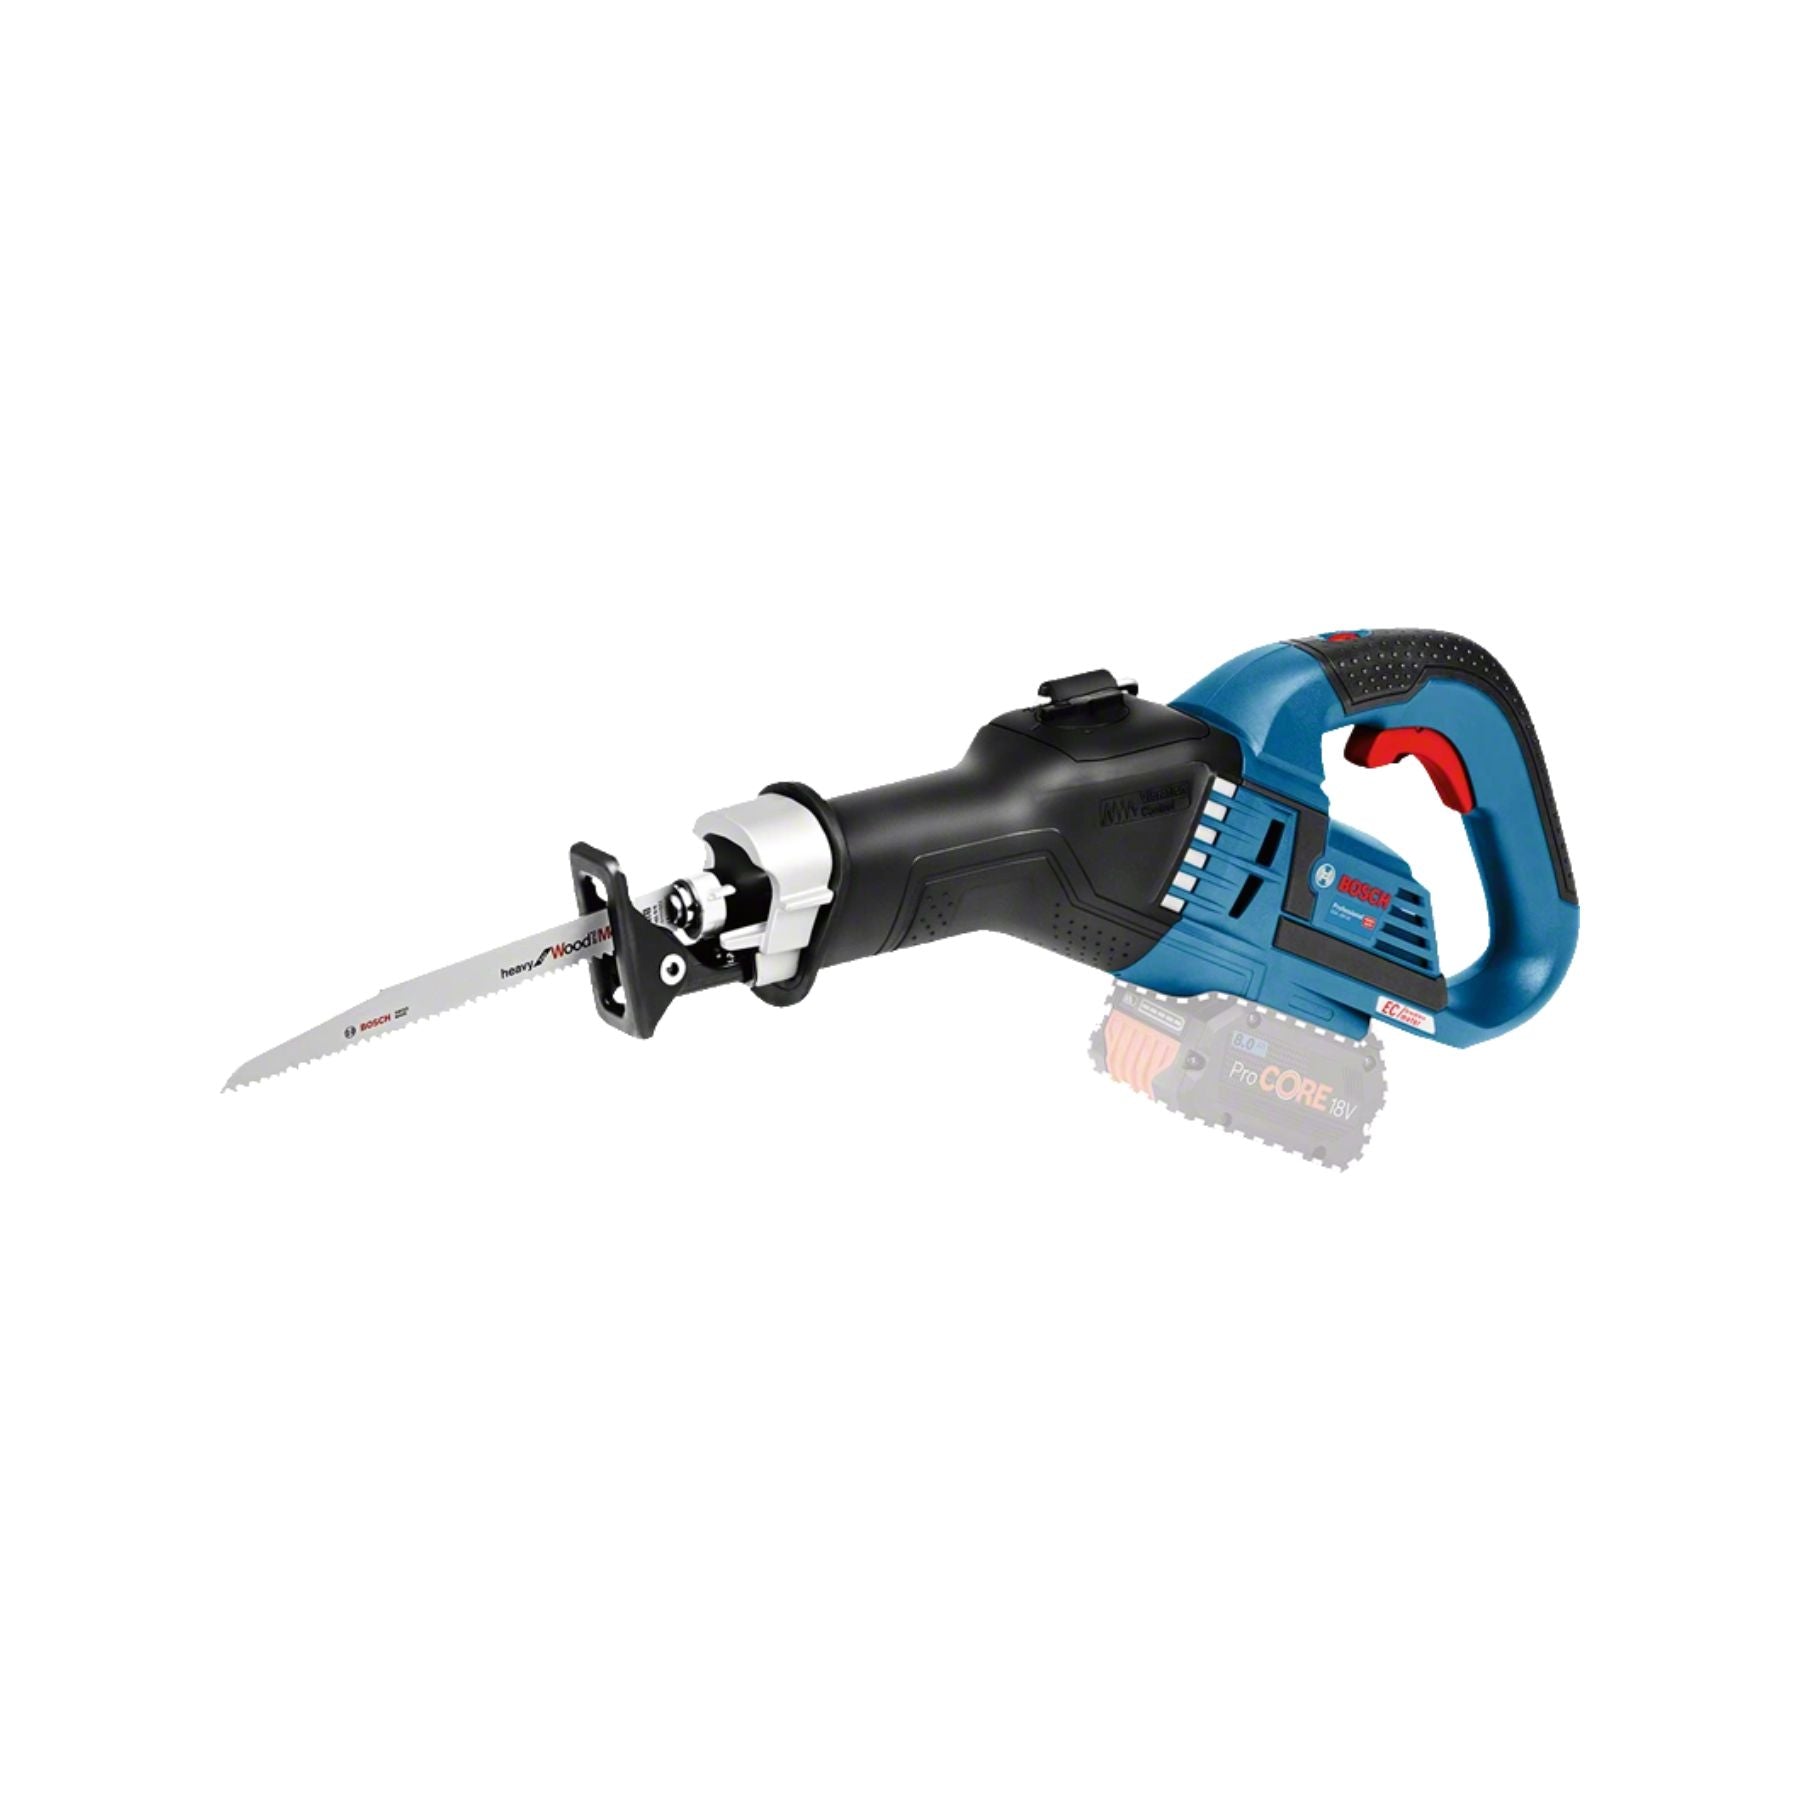 Bosch (GSA 18V-32) Cordless Reciprocating Saw - Bare Tool